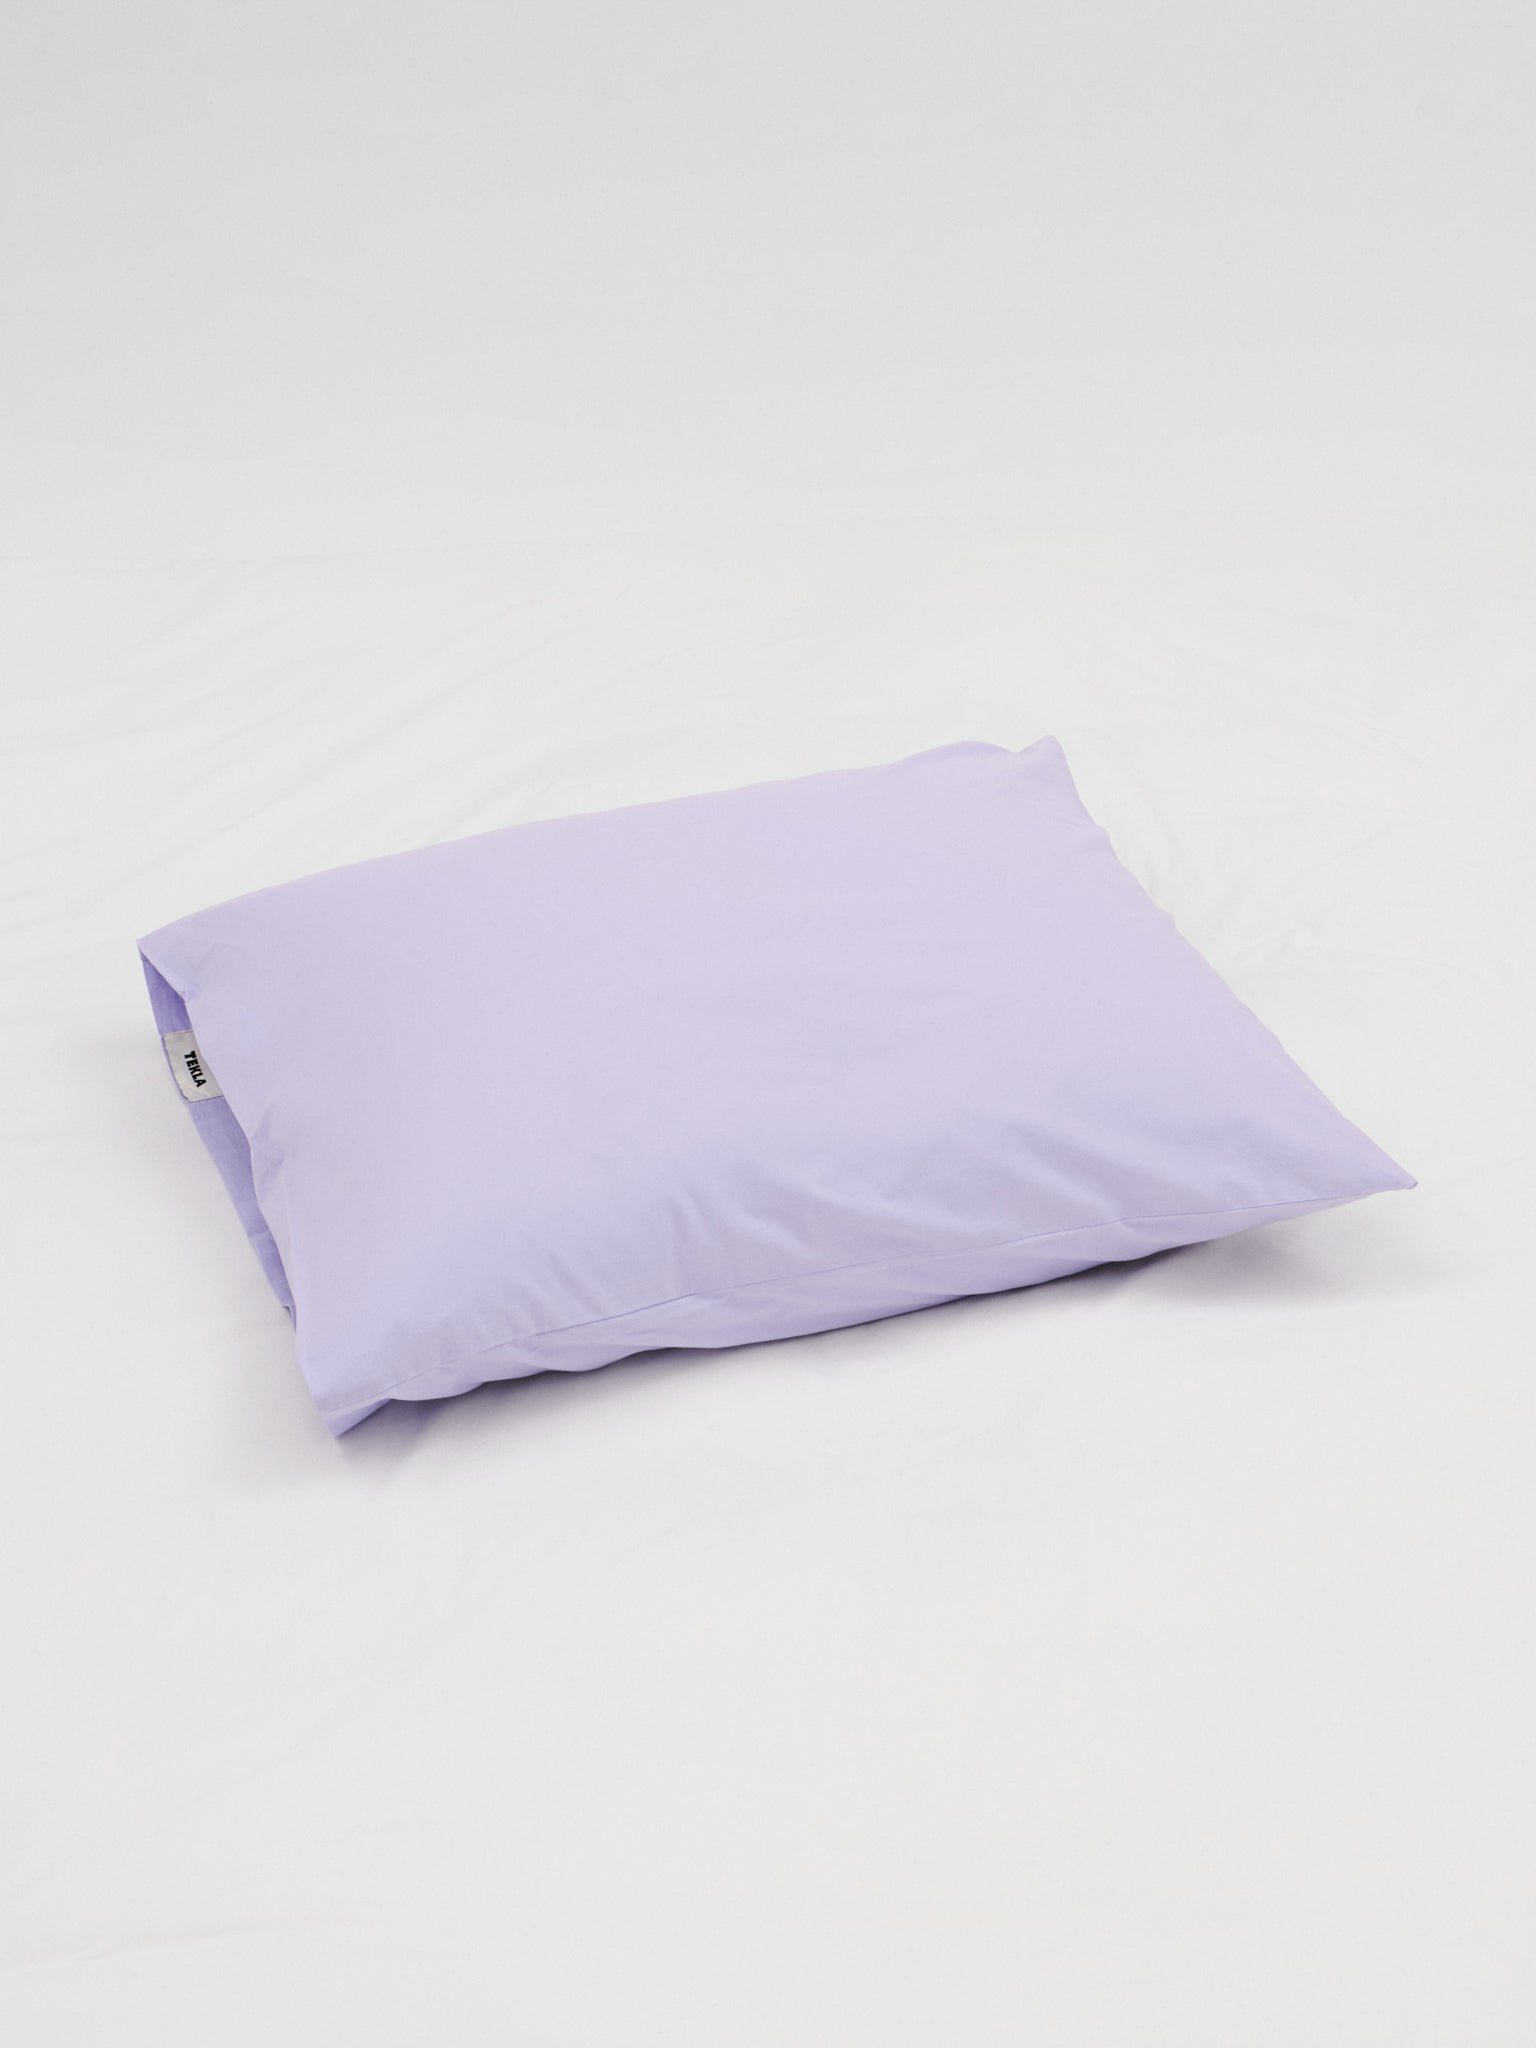 Tekla - Percale Pillow Sham in Lavender